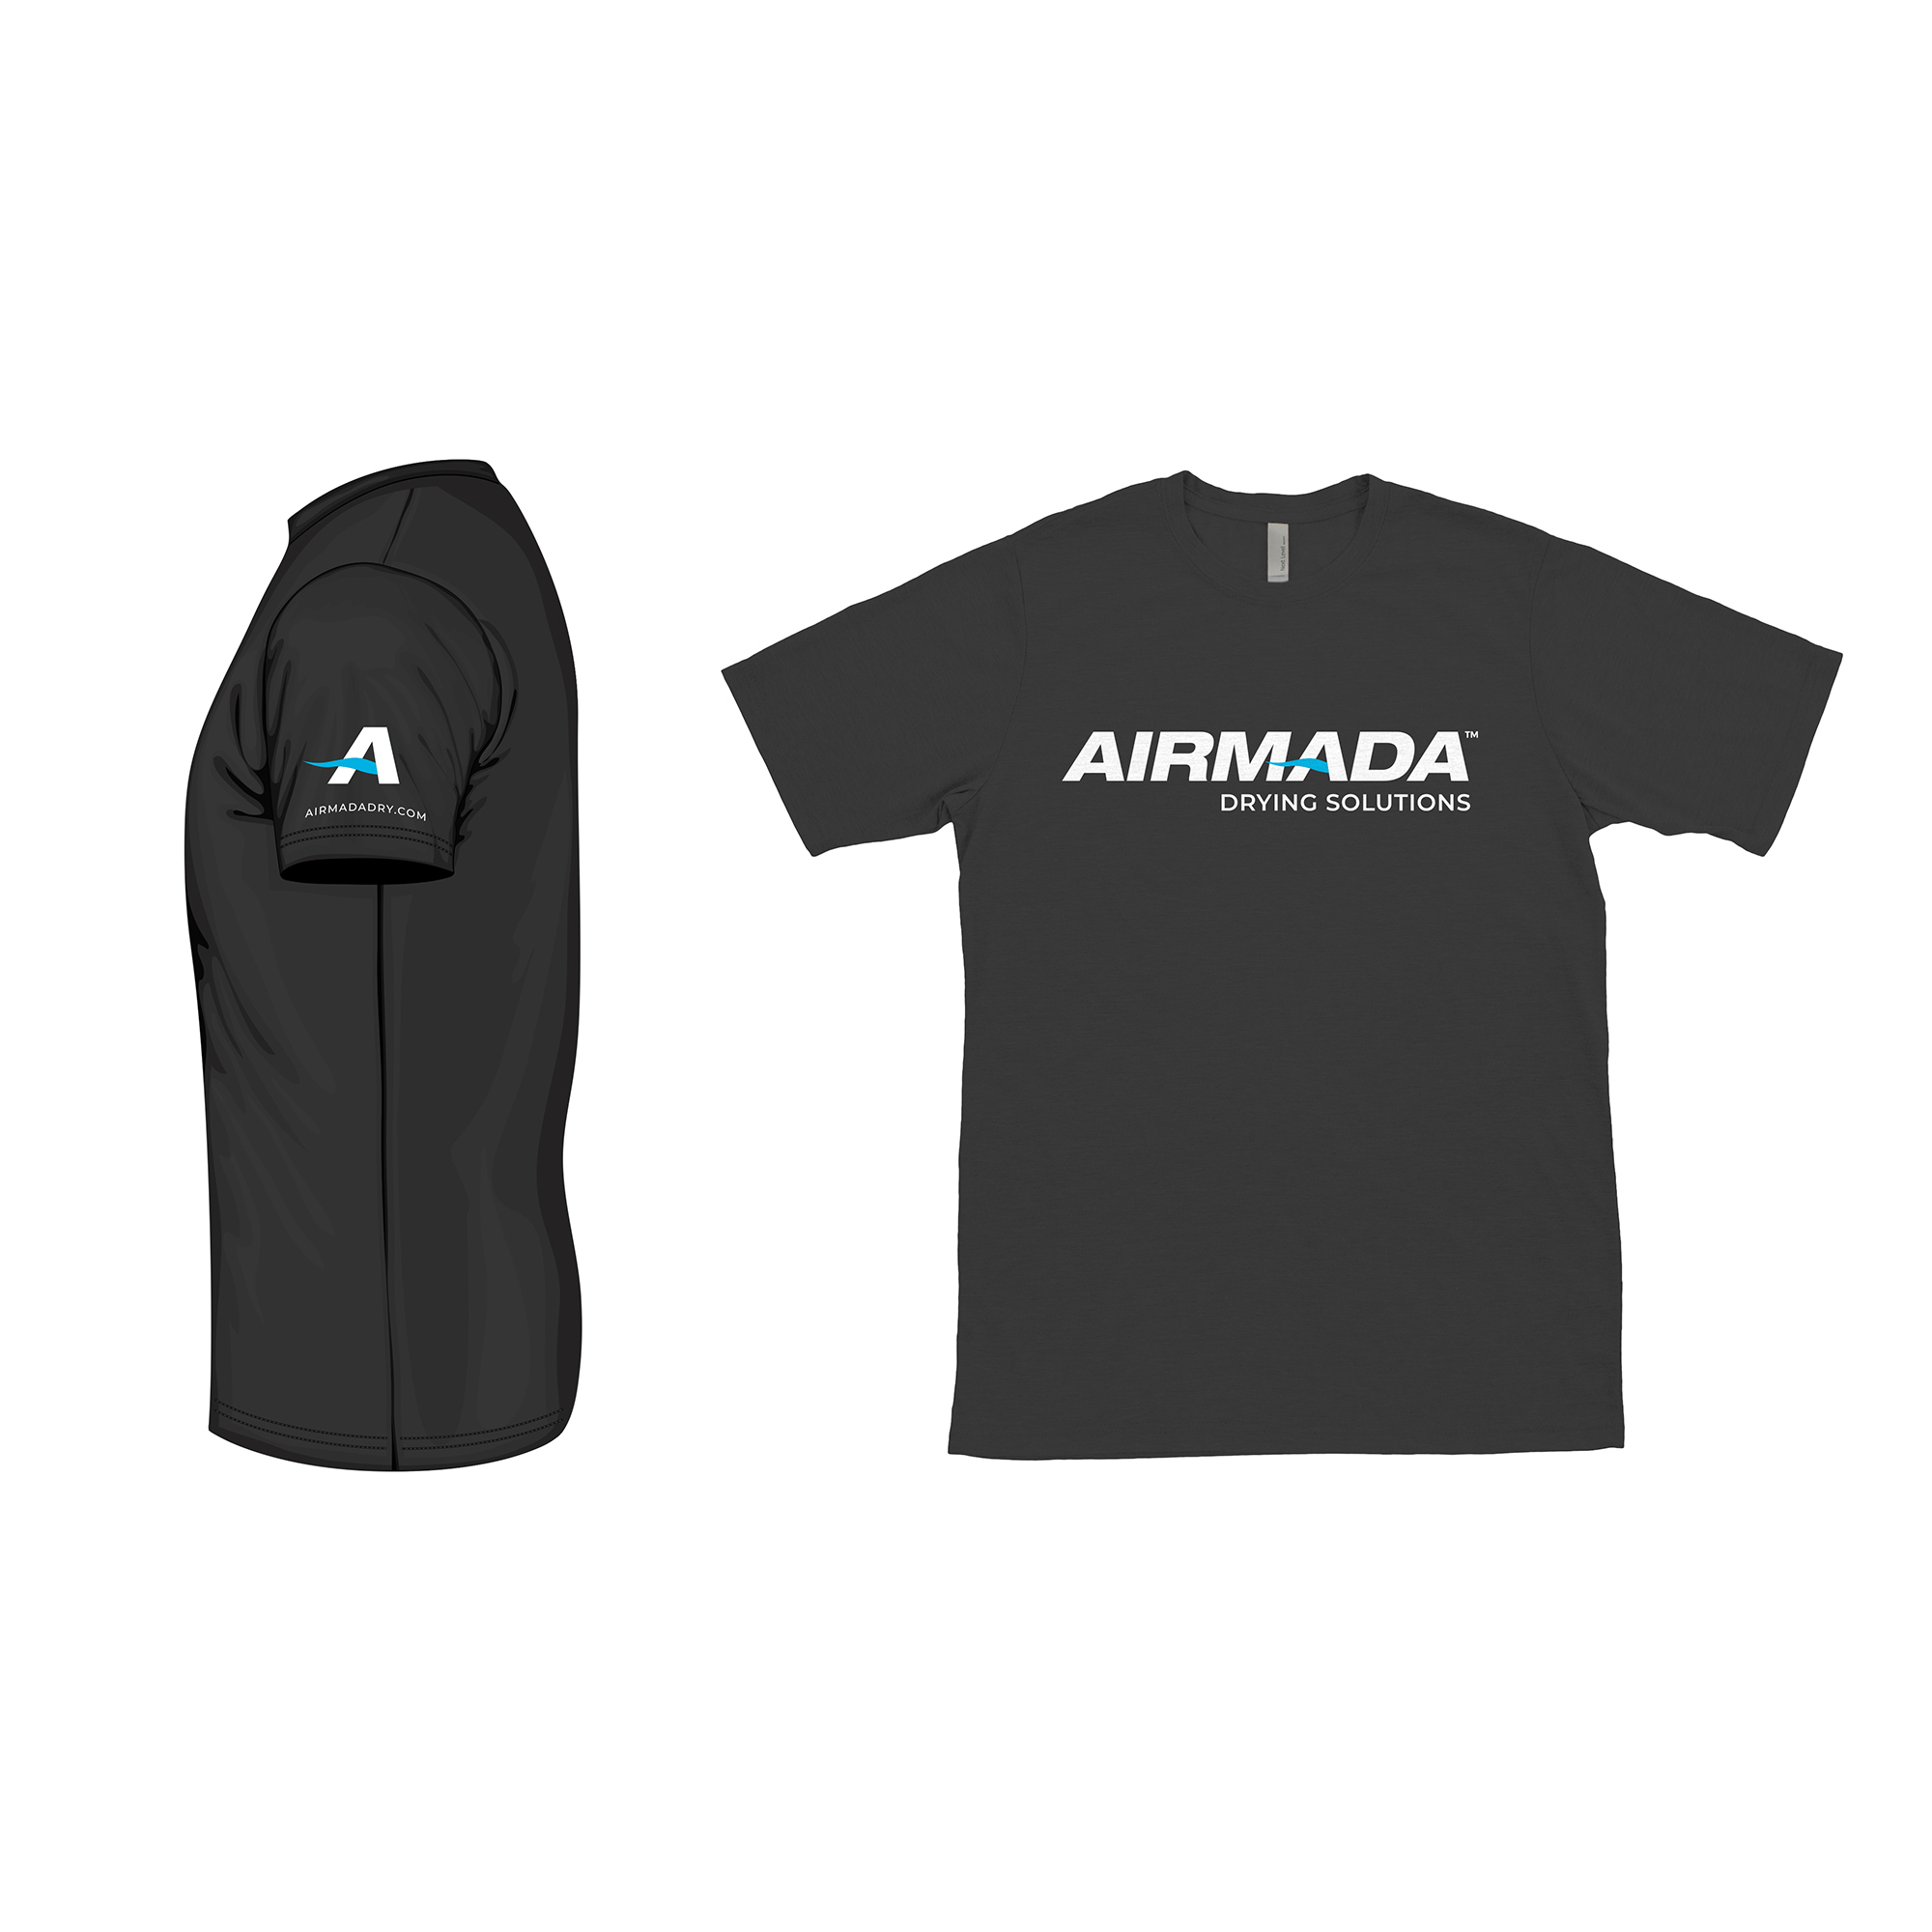 branded apparel with logo - black shirt